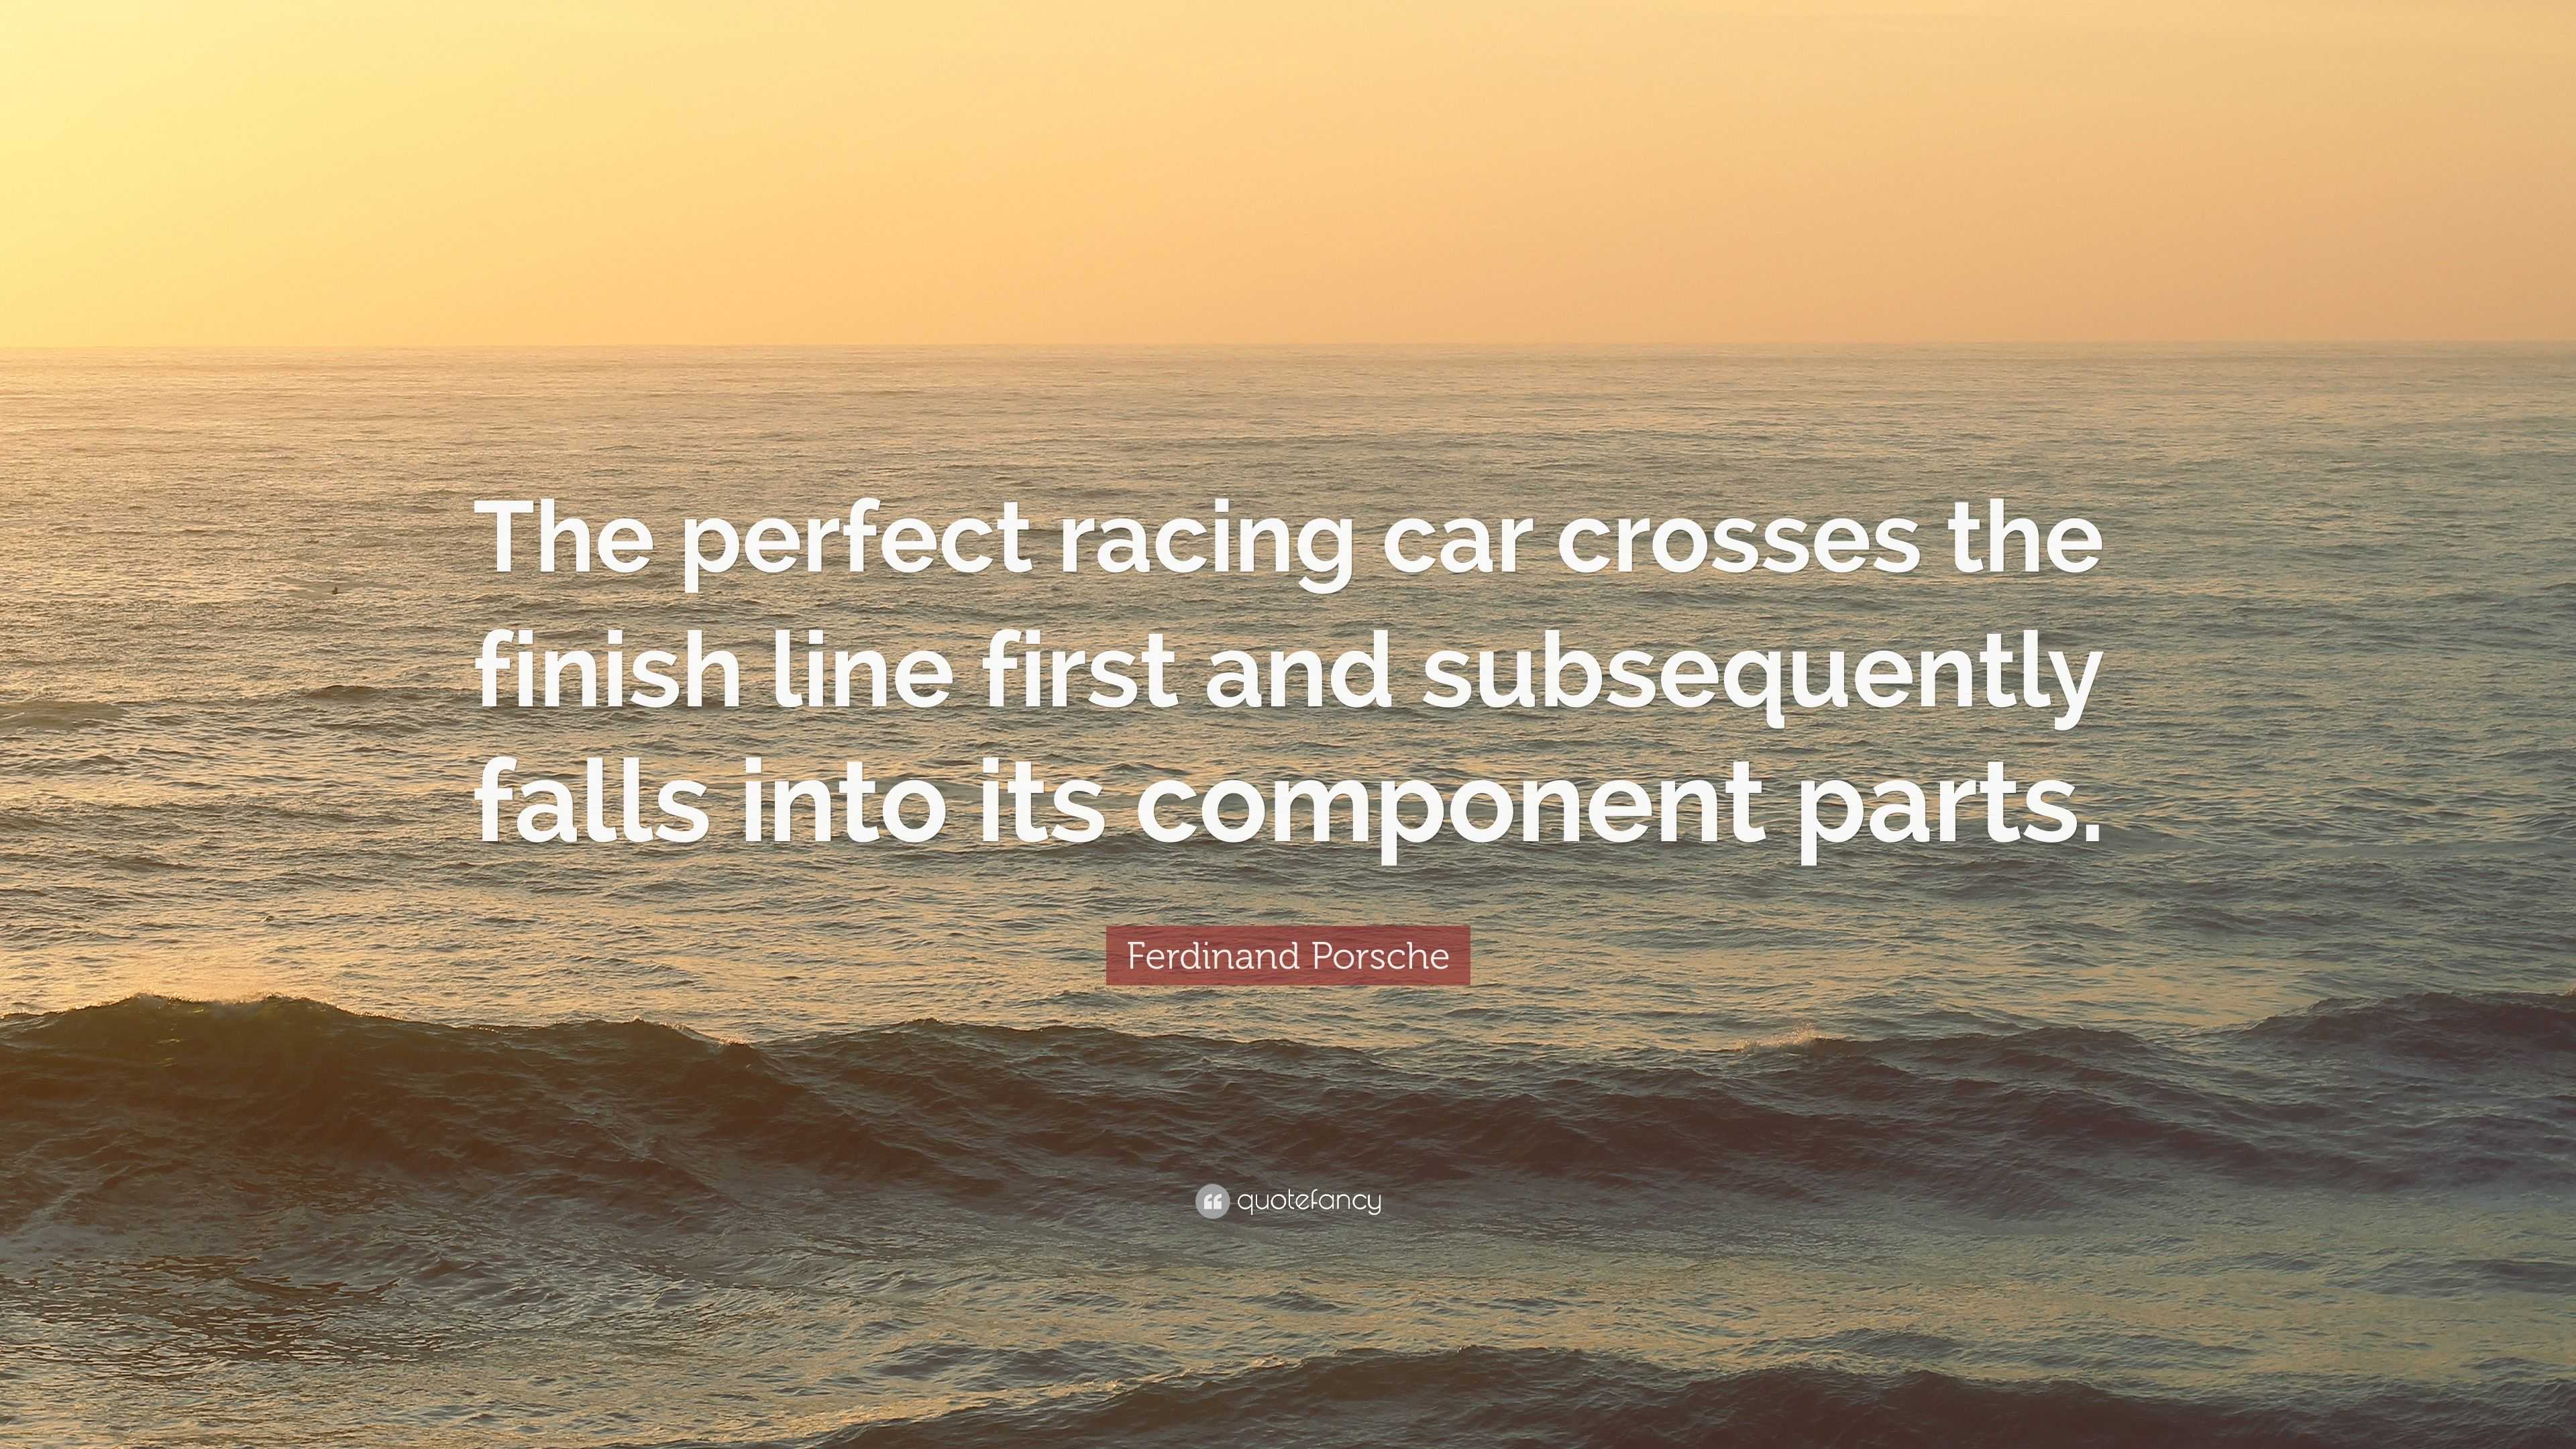 Ferdinand Porsche Quote: “The perfect racing car crosses the finish